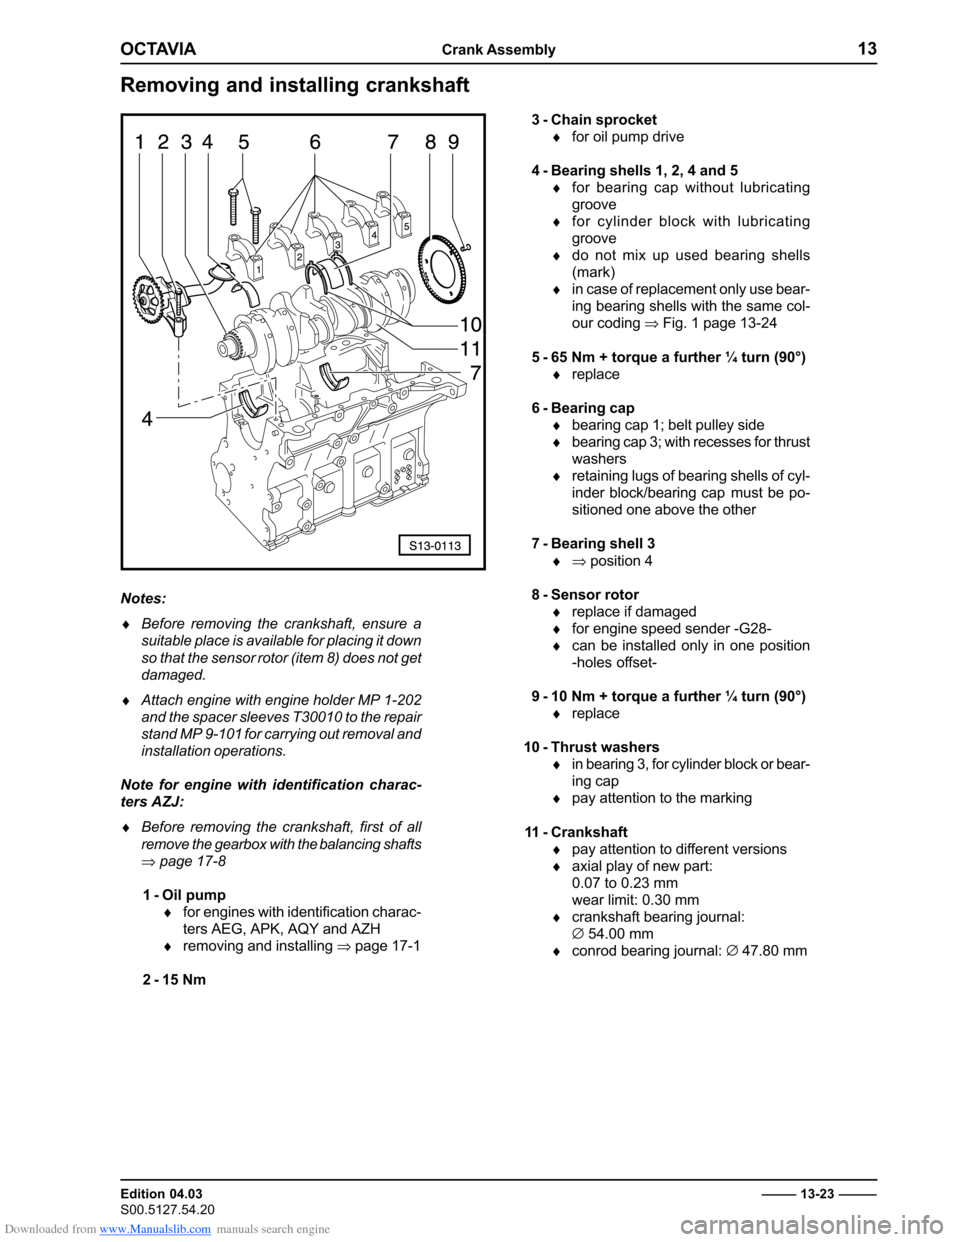 SKODA OCTAVIA 2000 1.G / (1U) 2.0 85kw Engine Repair Manual Downloaded from www.Manualslib.com manuals search engine �����������������������
������������� 
���������������������������������
� �������������
����������������������������������
������
� ������� ��